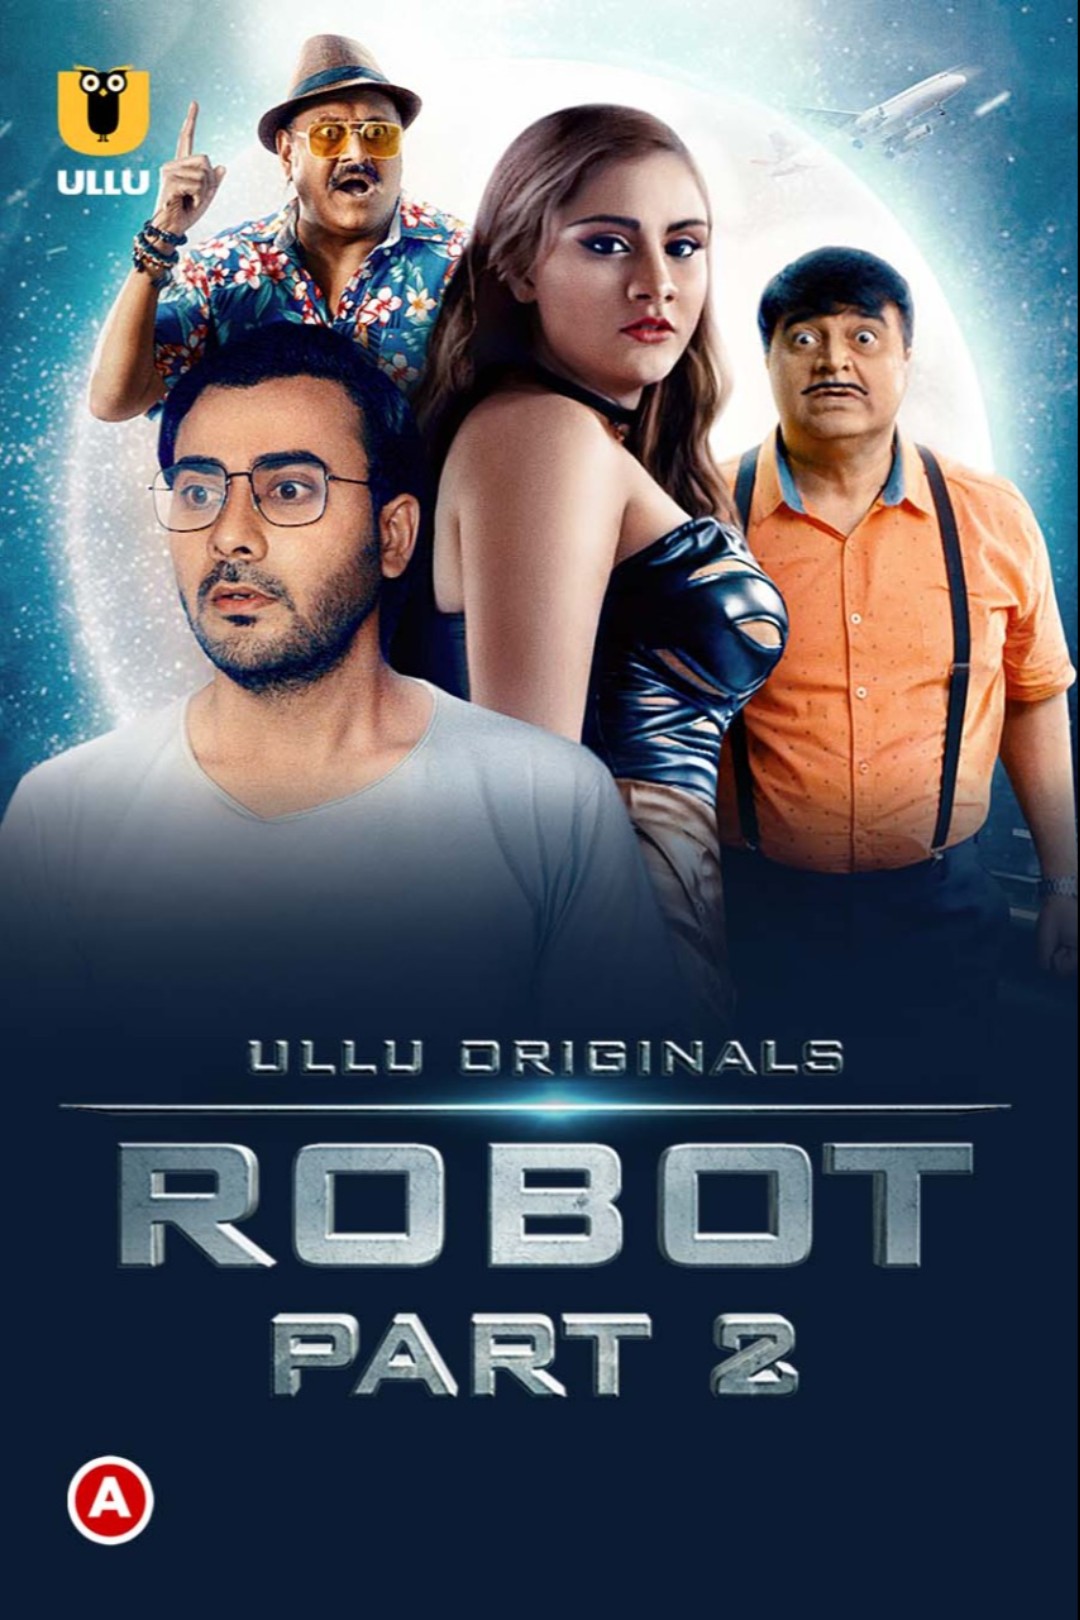 Robot (Part 2) 2021 S01 Hindi Ullu Originals Complete Web Series 250MB HDRip 480p Download